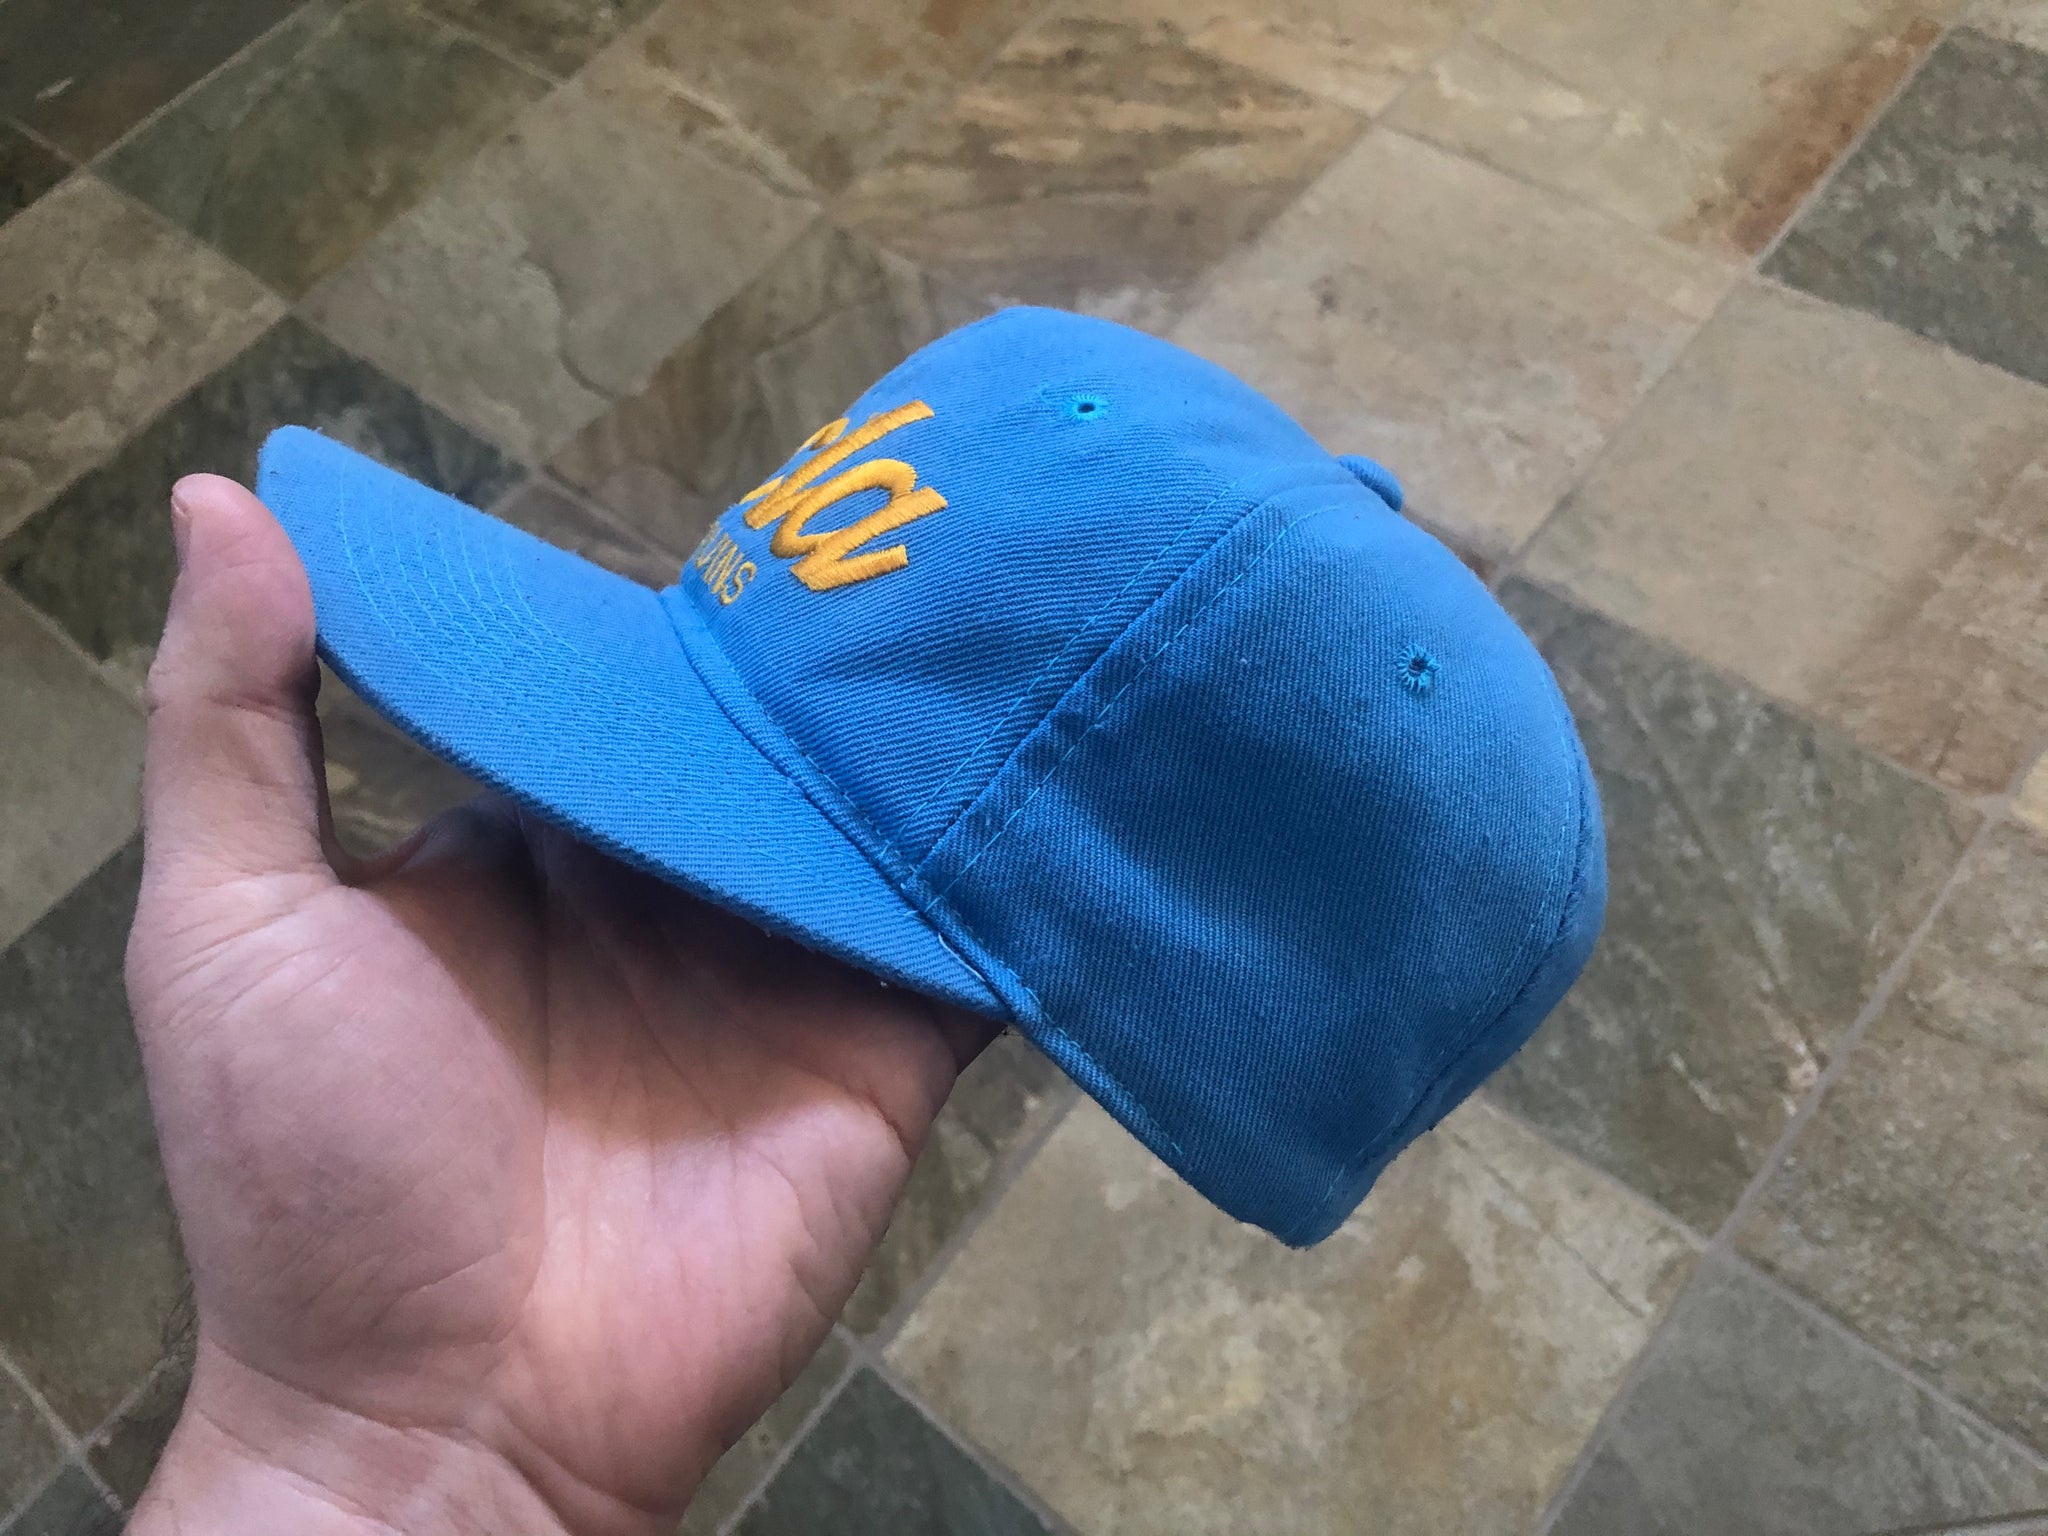 Vintage Sports Specialties The Pro UCLA Bruins Single Script Snapback Hat NCAA